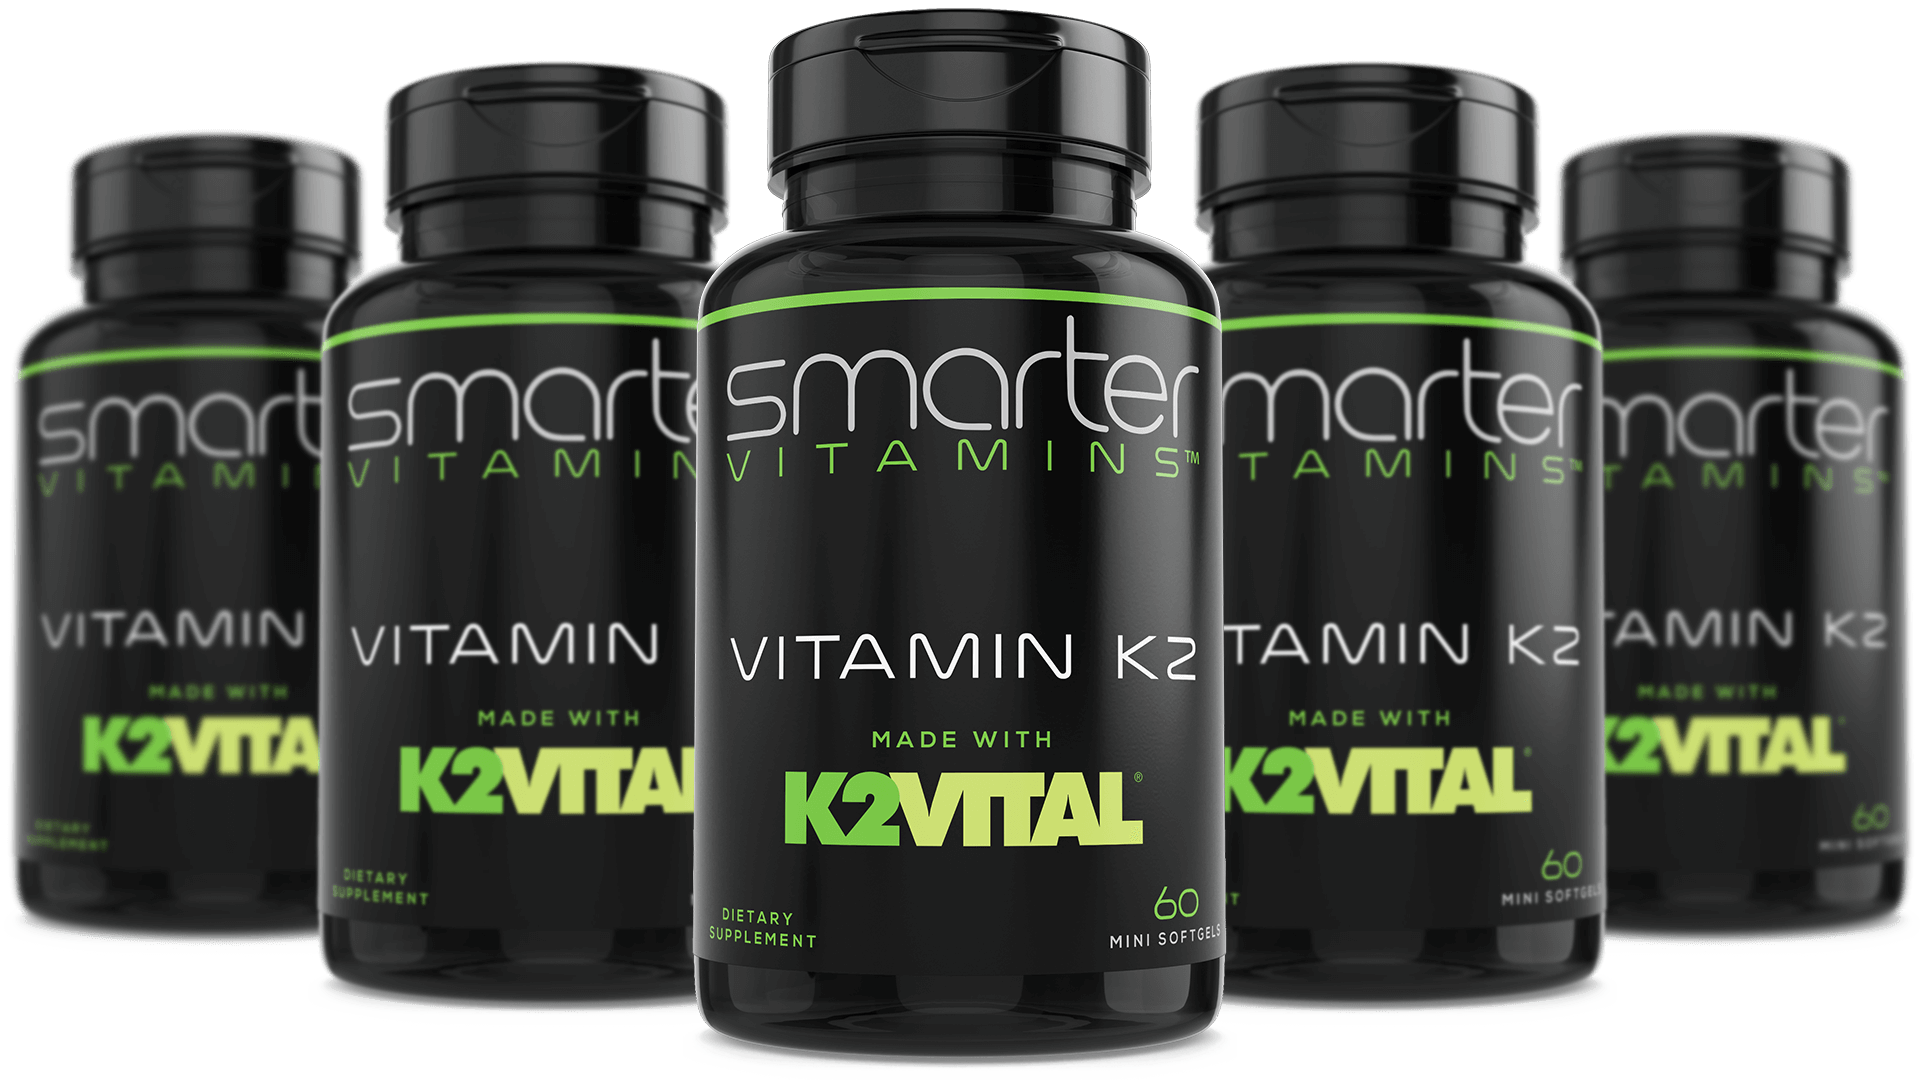 Smarter Vitamin K2 – SmarterVitamins